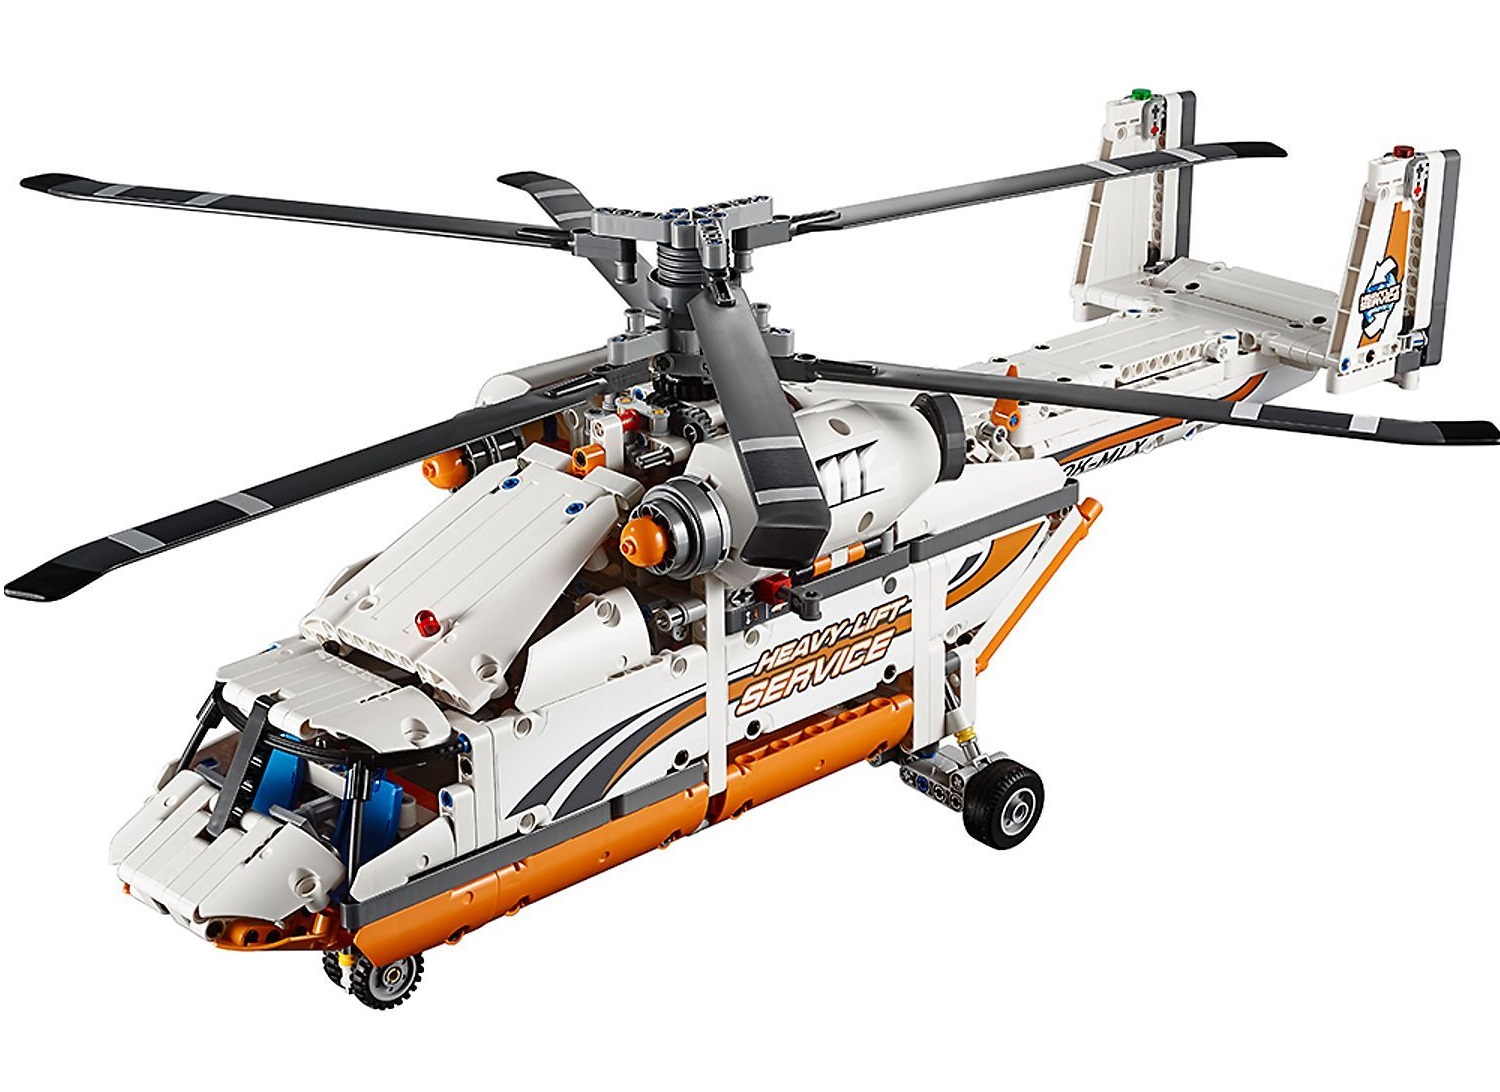 Helicóptero de transporte pesado ( Lego 42052 ) imagen a